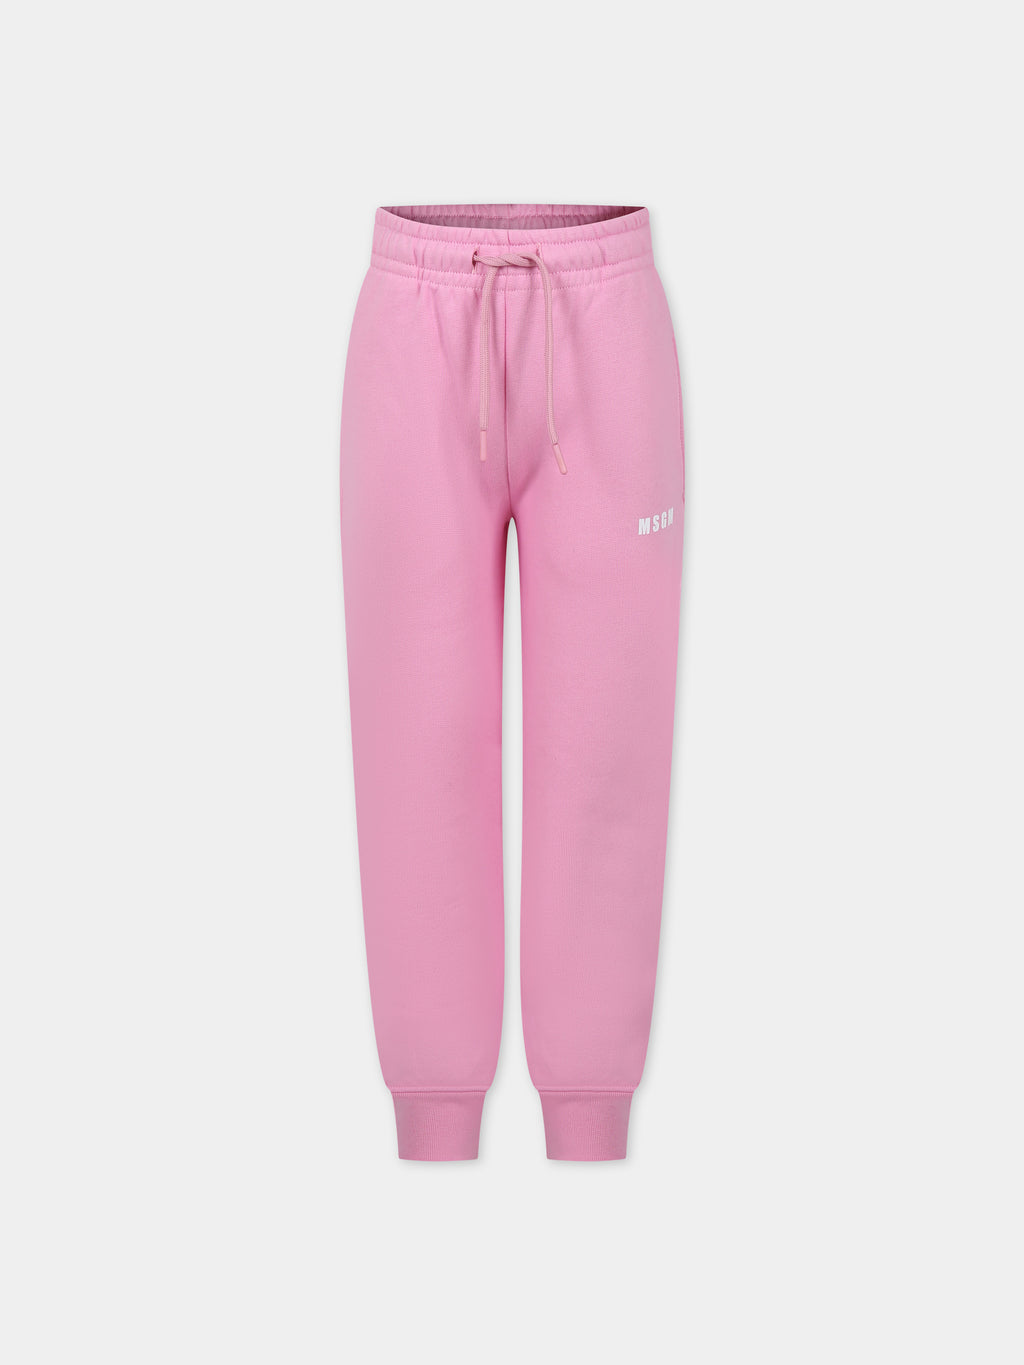 Pantaloni rosa per bambina con logo